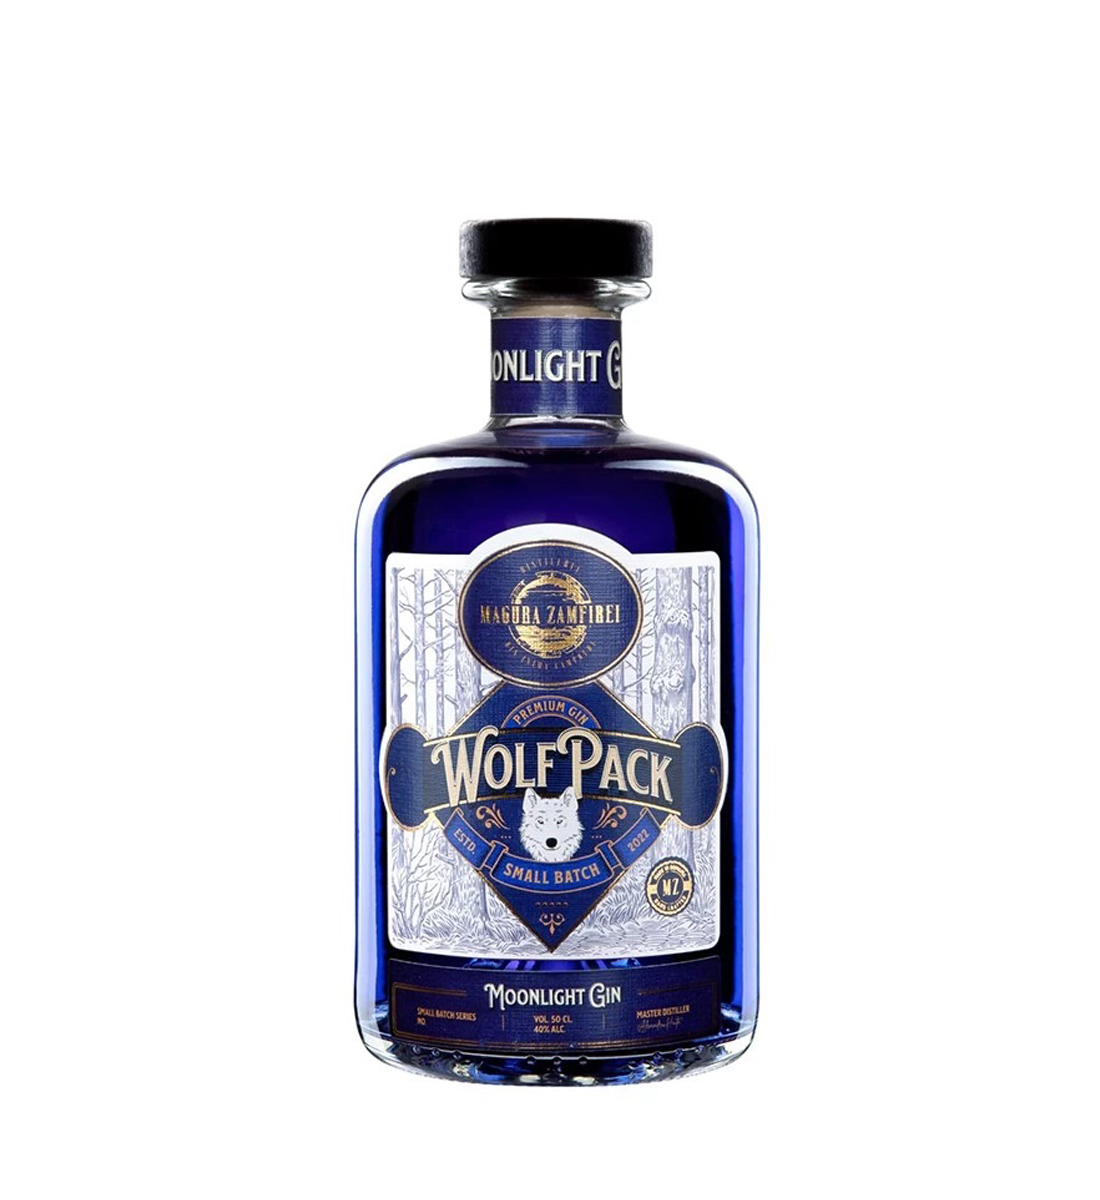 Magura Zamfirei Wolfpack Moonlight Gin 0.5L